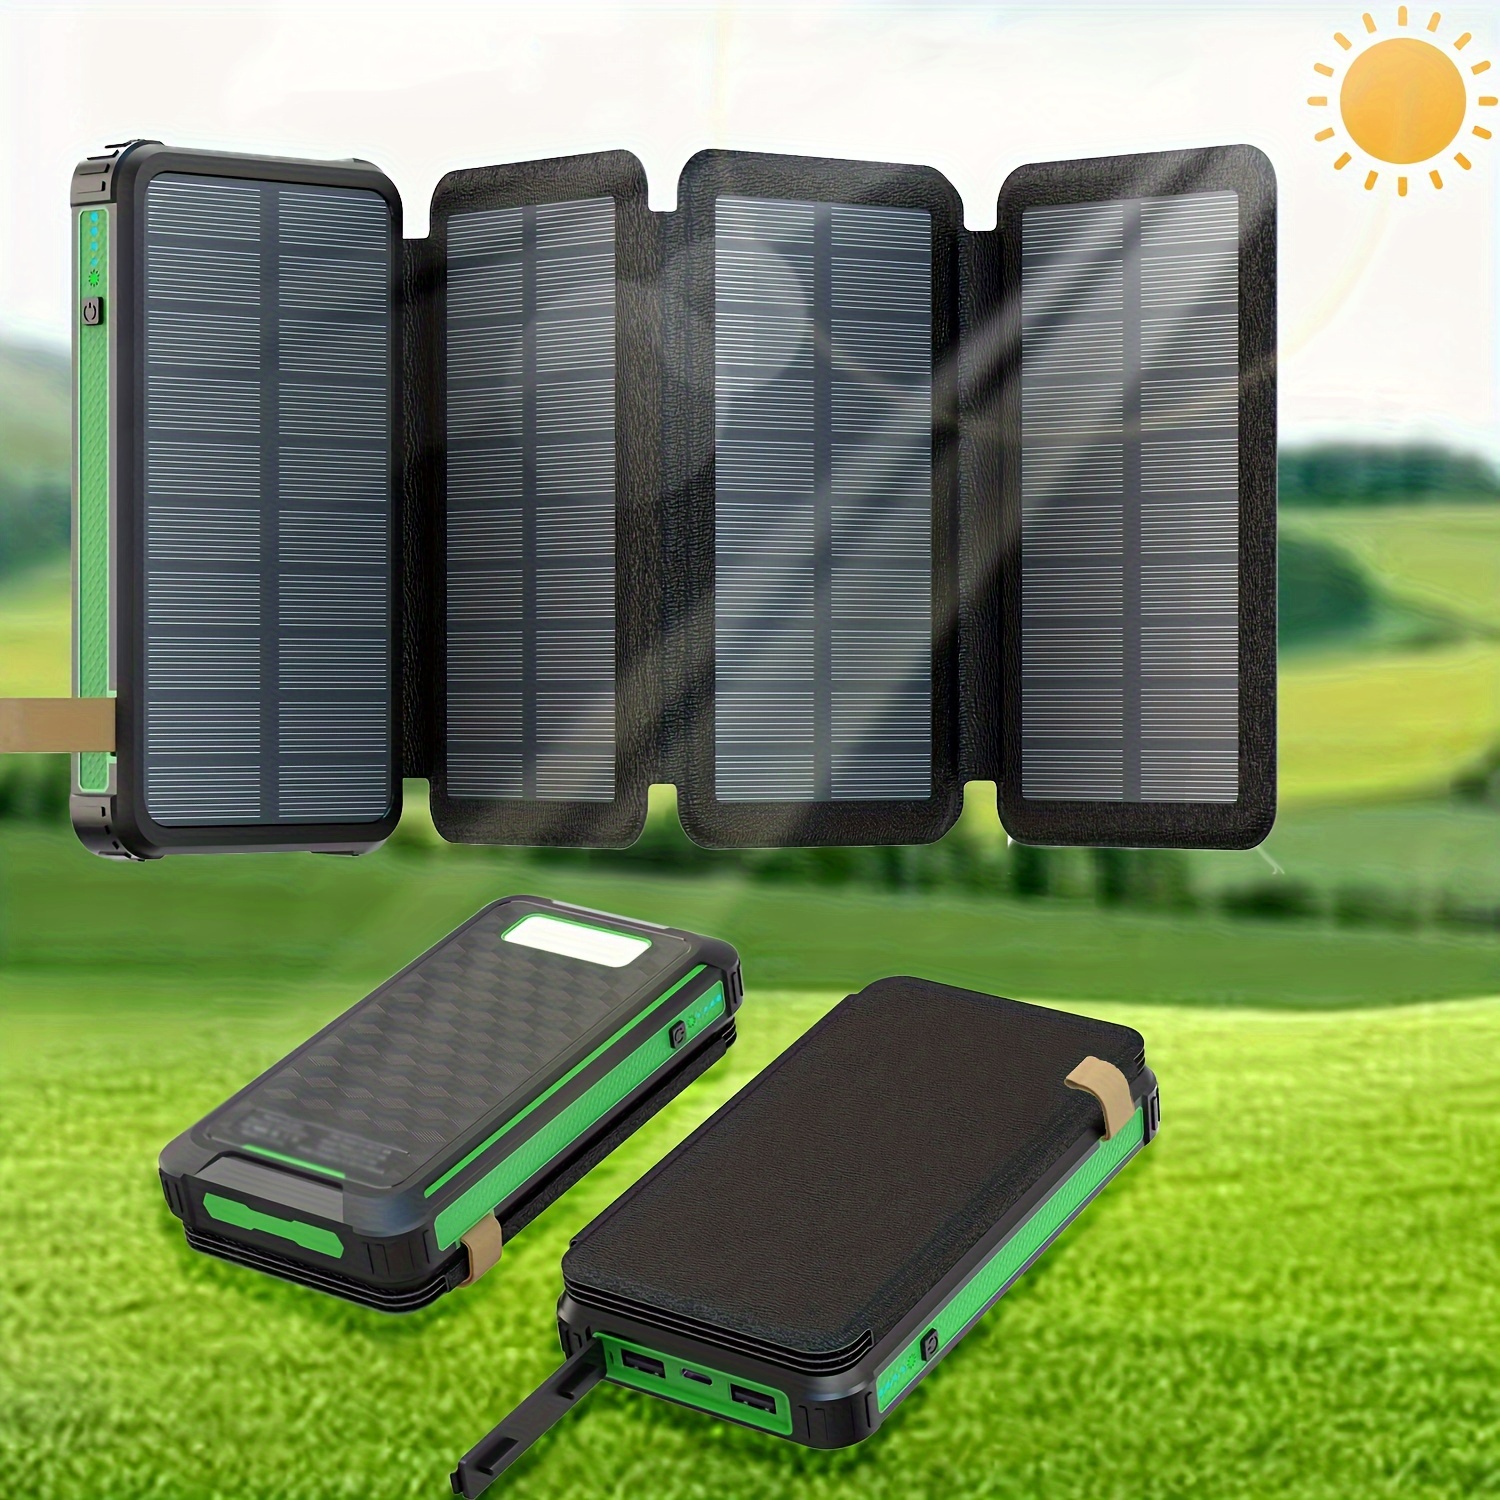 Cargador Solar Portatil Para Celular Bateria Externa 2 Puertos Light Power  Bank